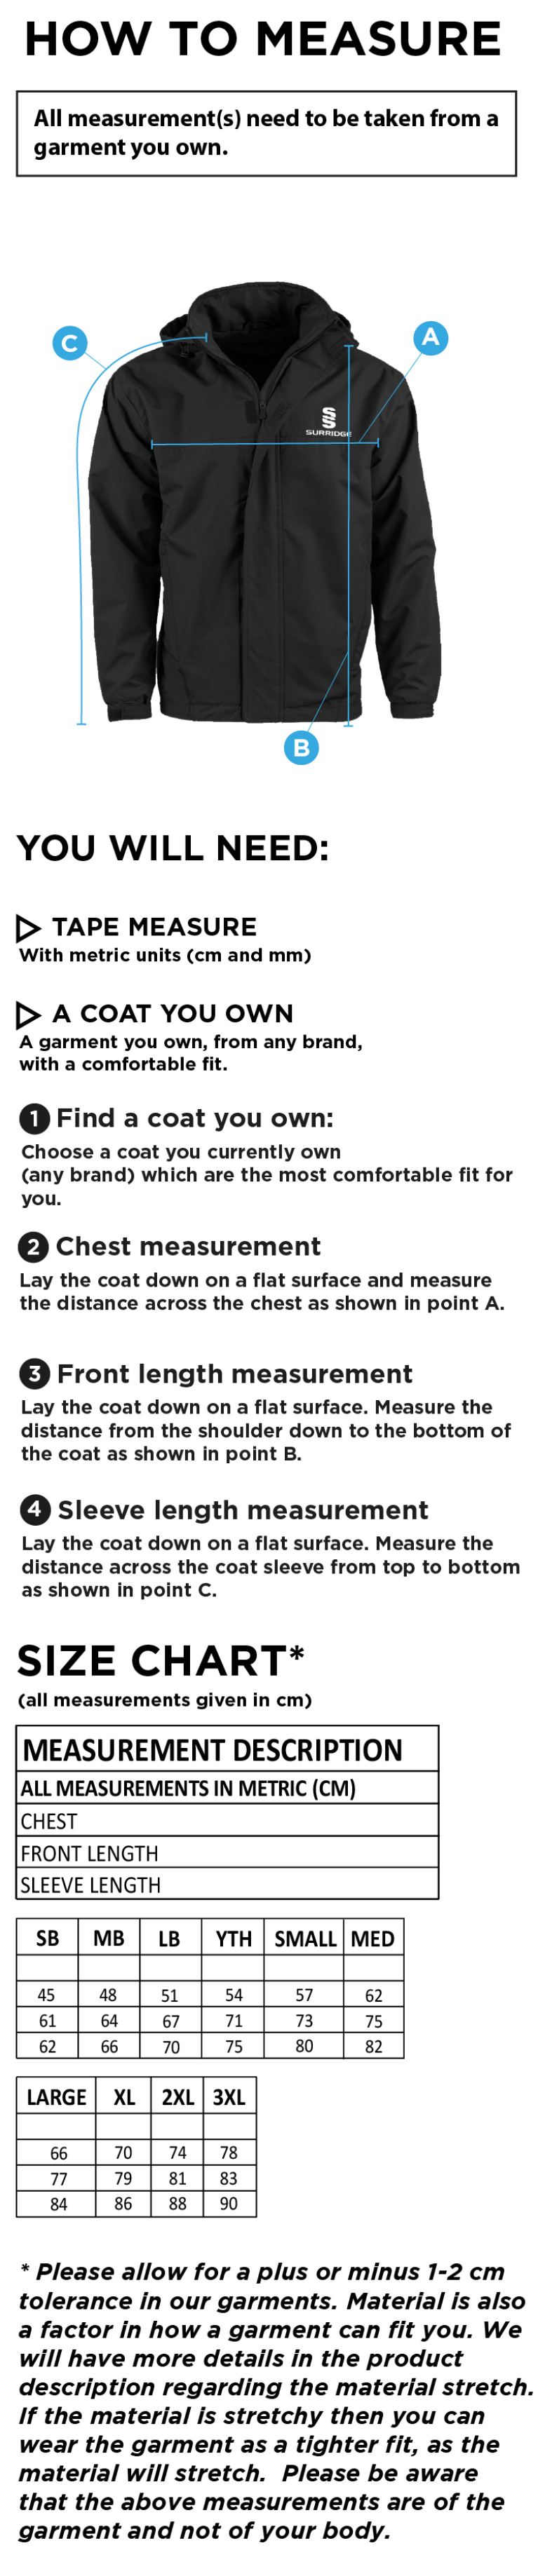 PRESTON HARRIERS Official Dual Fleece Lined Jacket : Navy - Size Guide